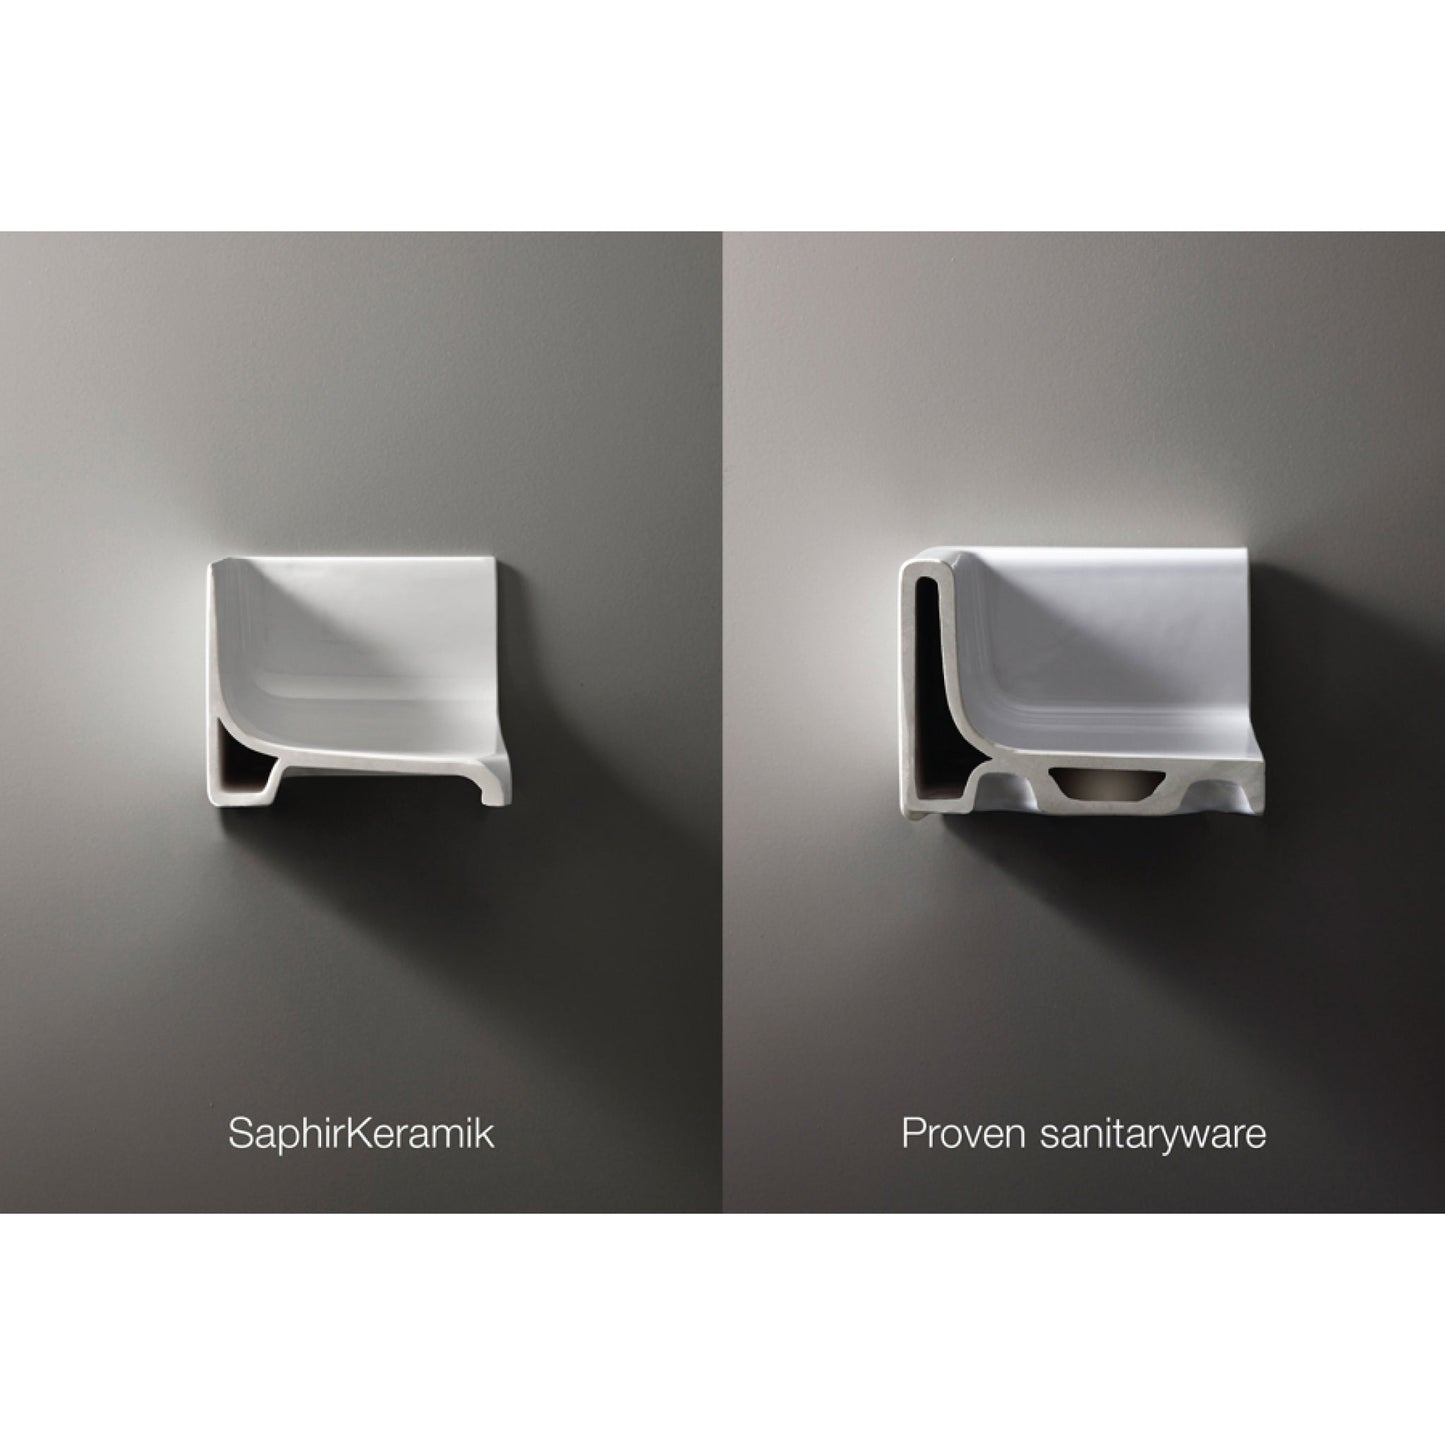 Laufen Ino 14" x 14" Square Matte White Ceramic Vessel Bathroom Sink Without Overflow Slot